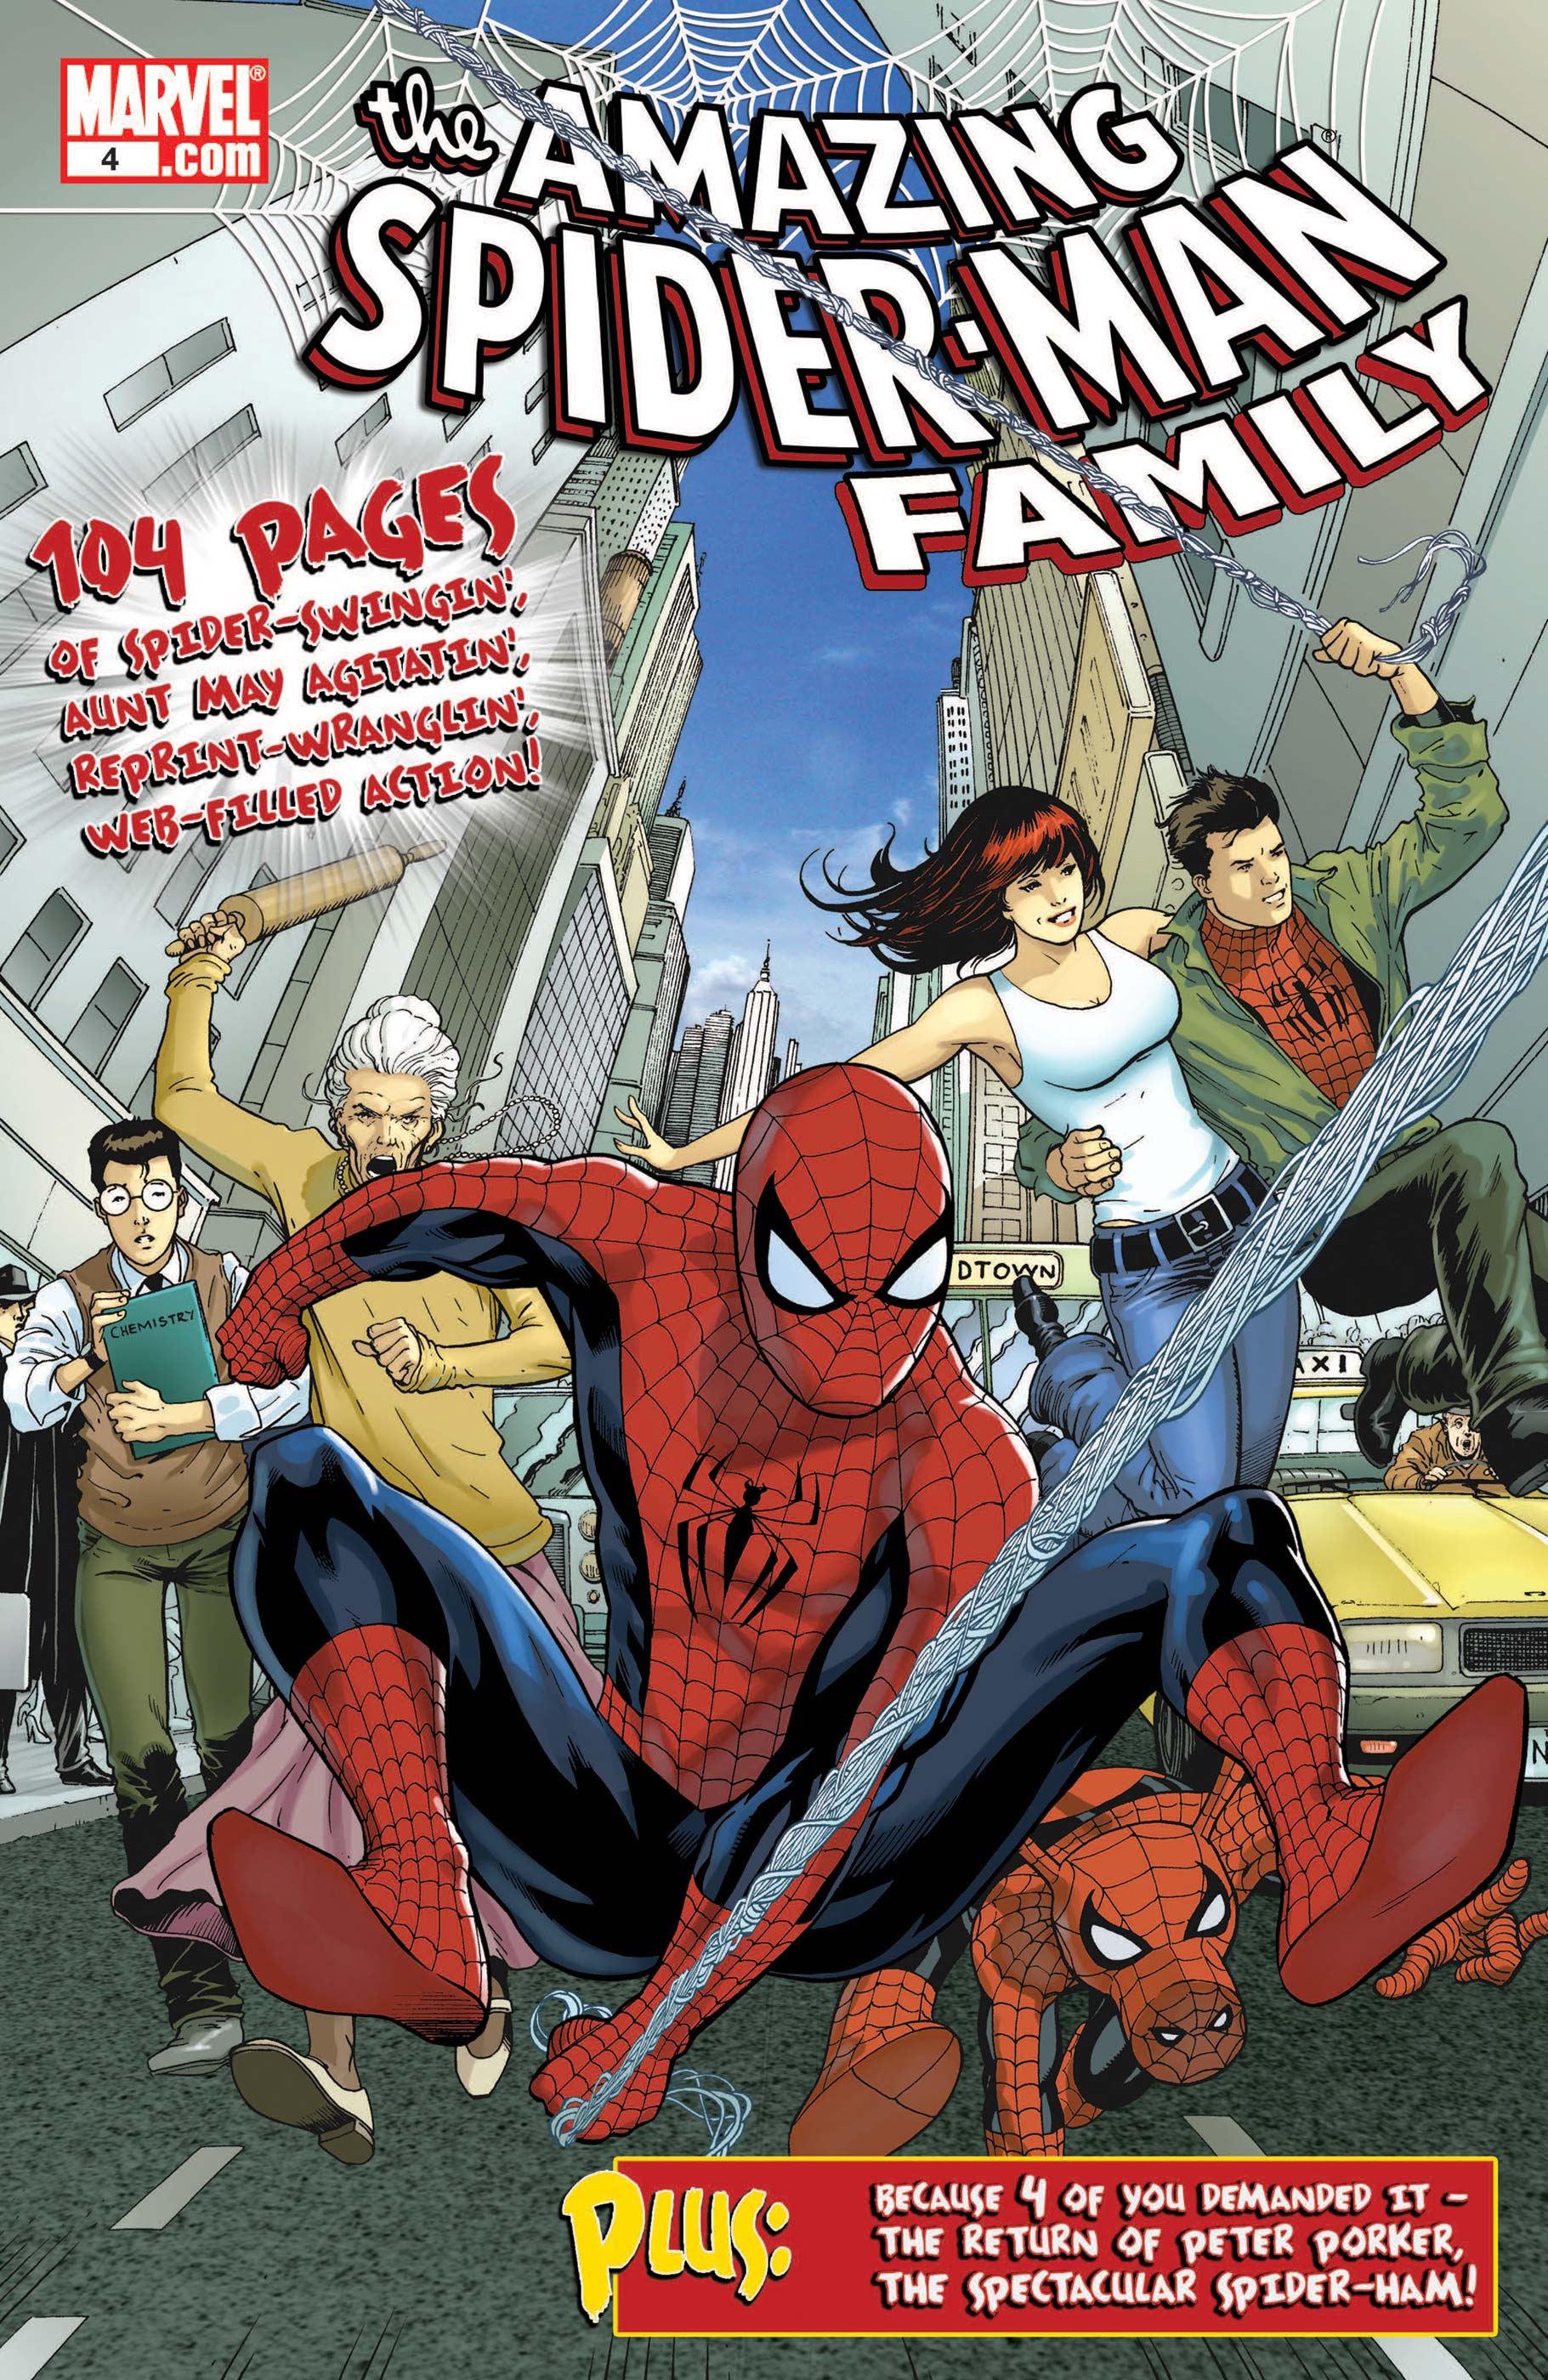 Amazing Spider-Man Family (2008) #4